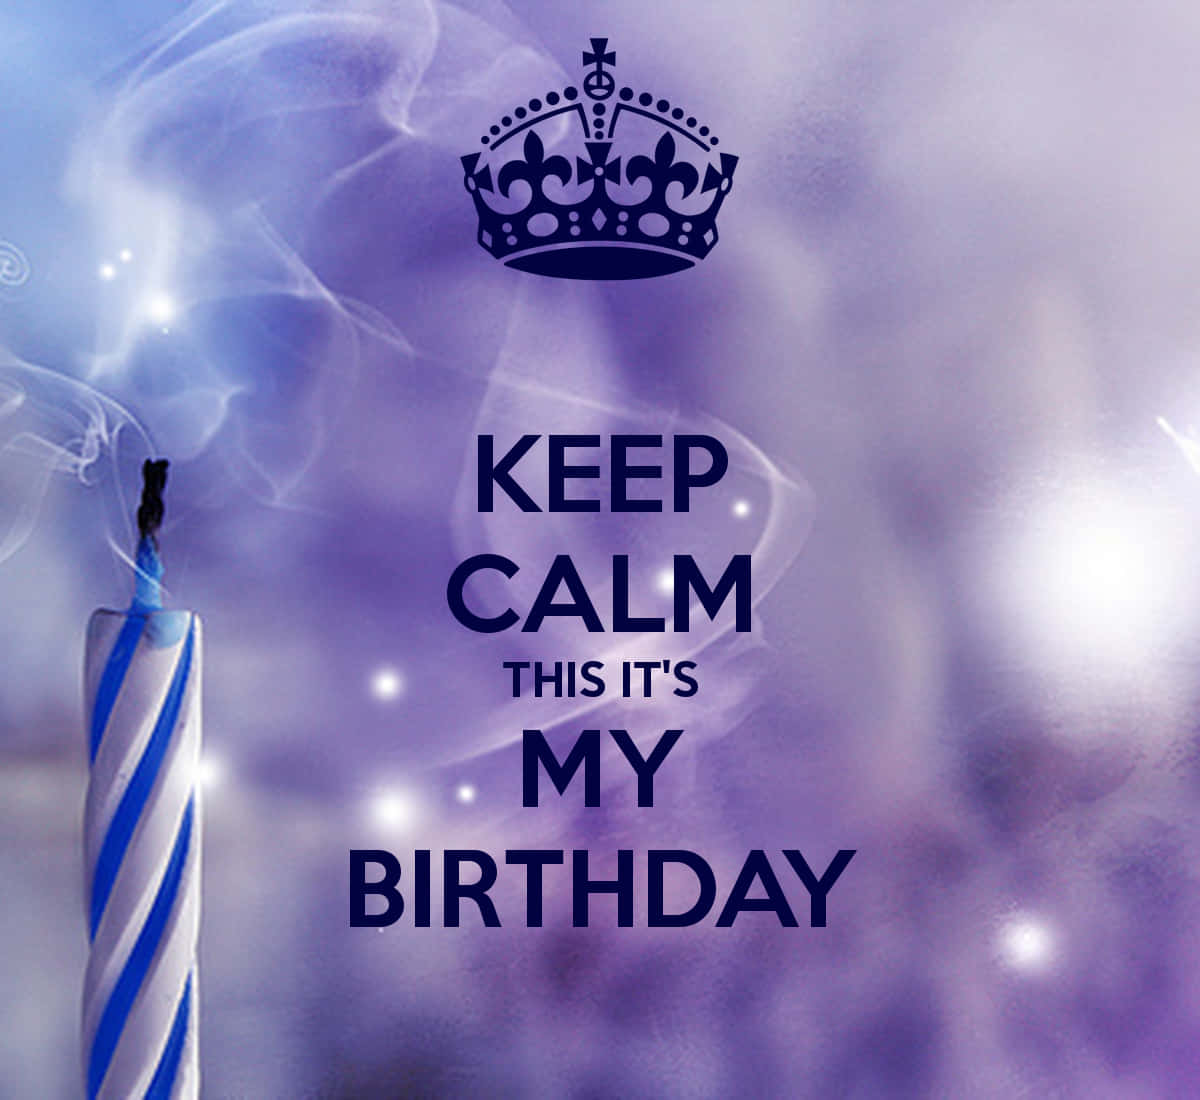 Celebratory Message - "Keep Calm, It's My Birthday!" in Smokey Blue Tones Wallpaper